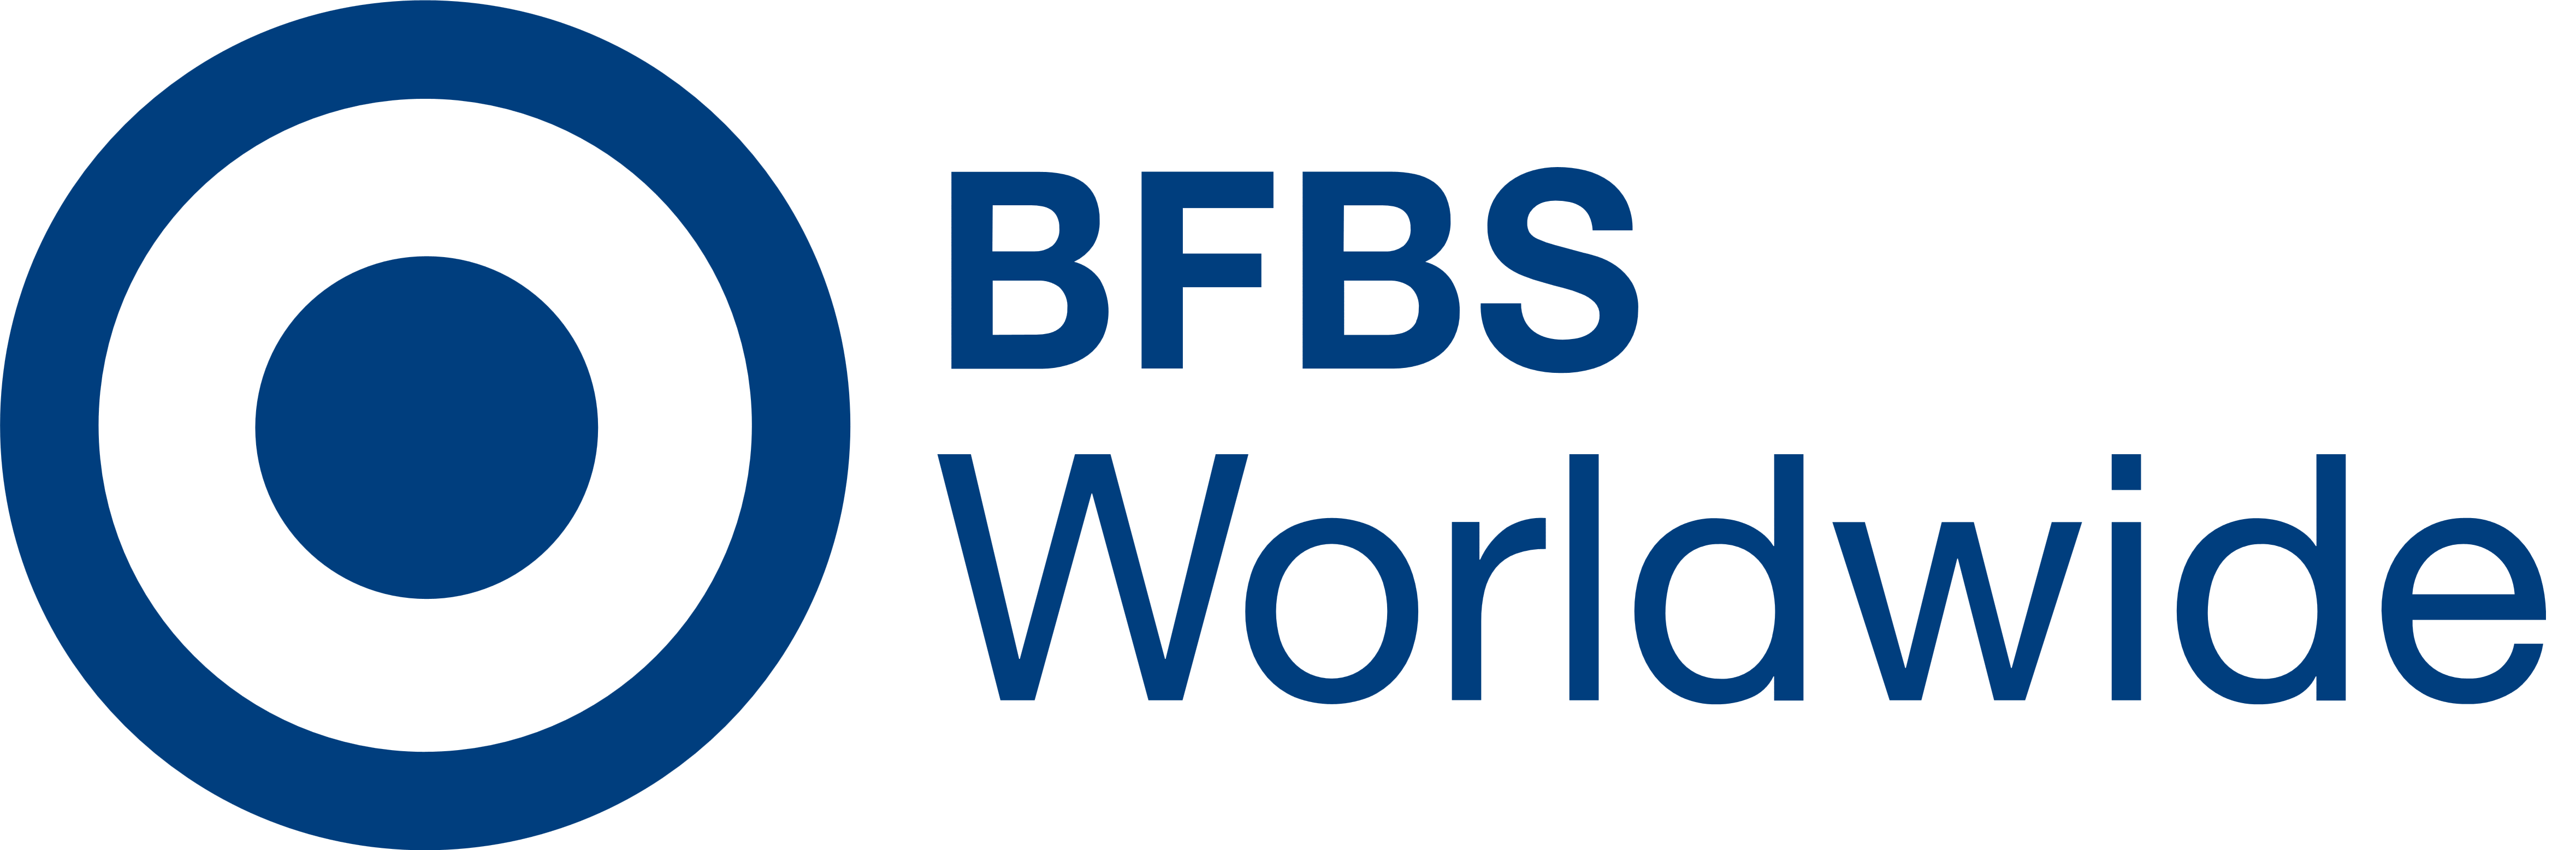 BFBS Worldwide – Logos Download